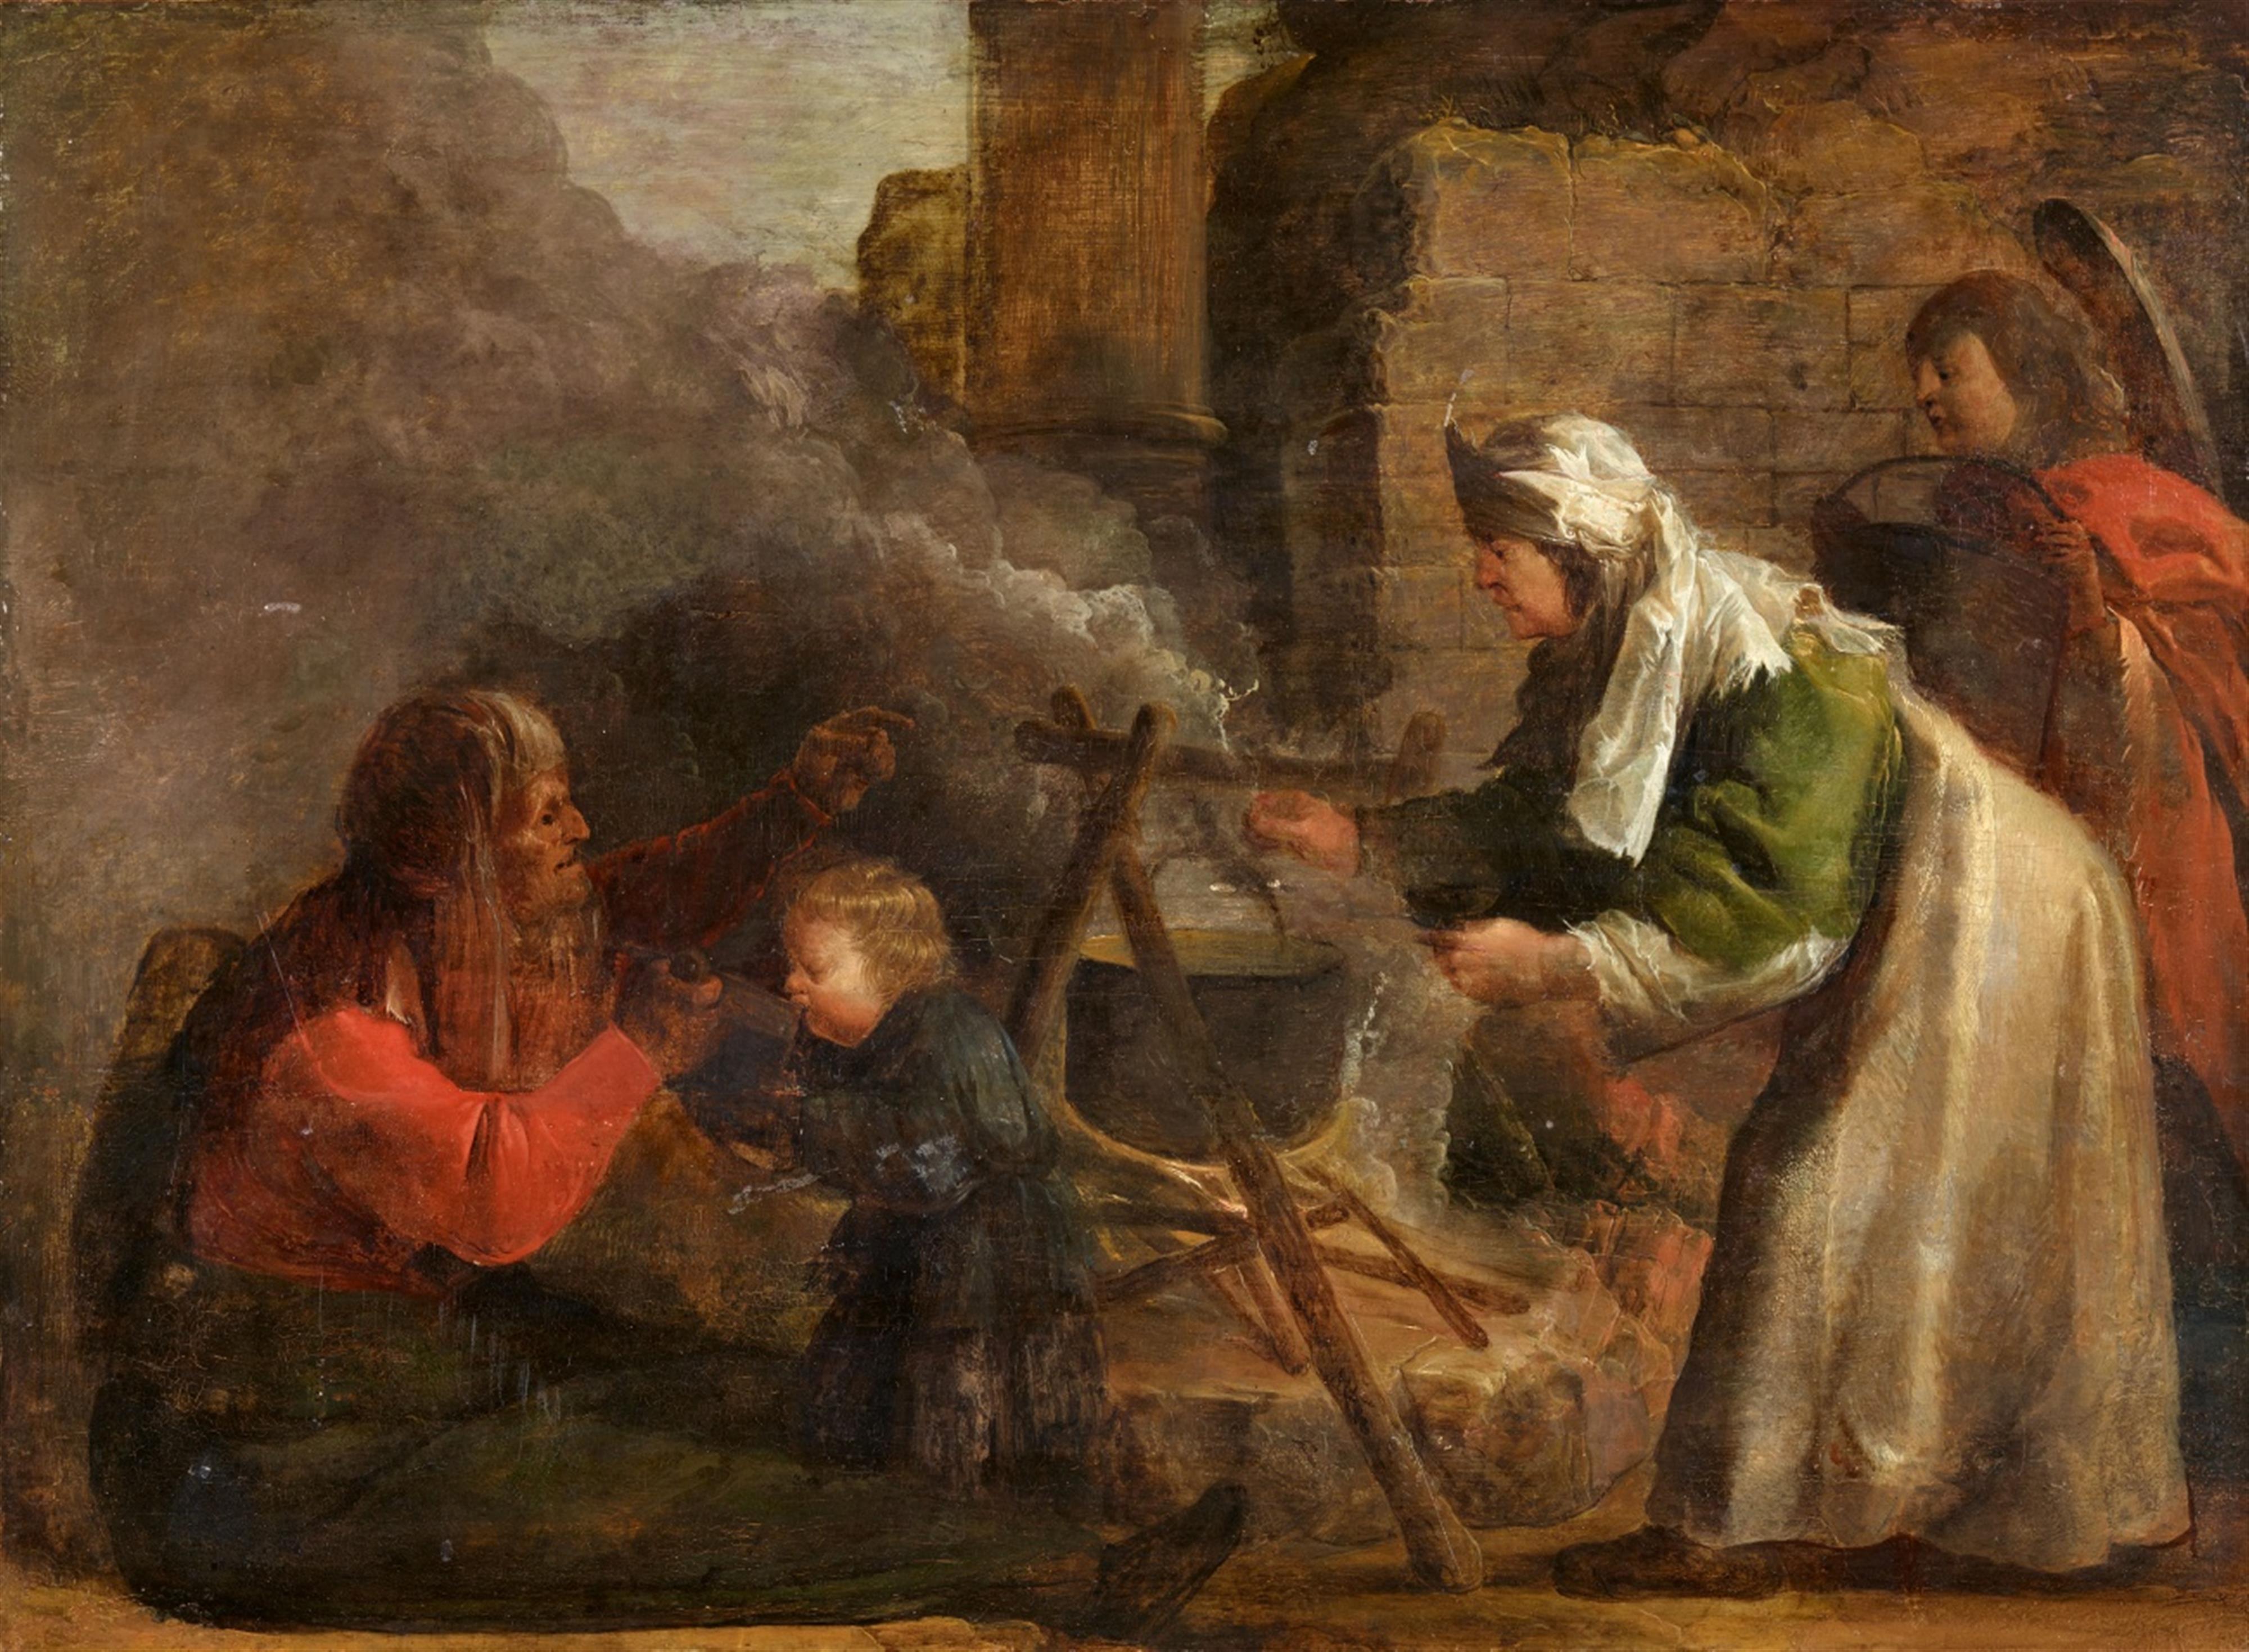 Jan van der Venne (Pseudo van der Venne) - Figures Preparing a Meal amid Ruins - image-1